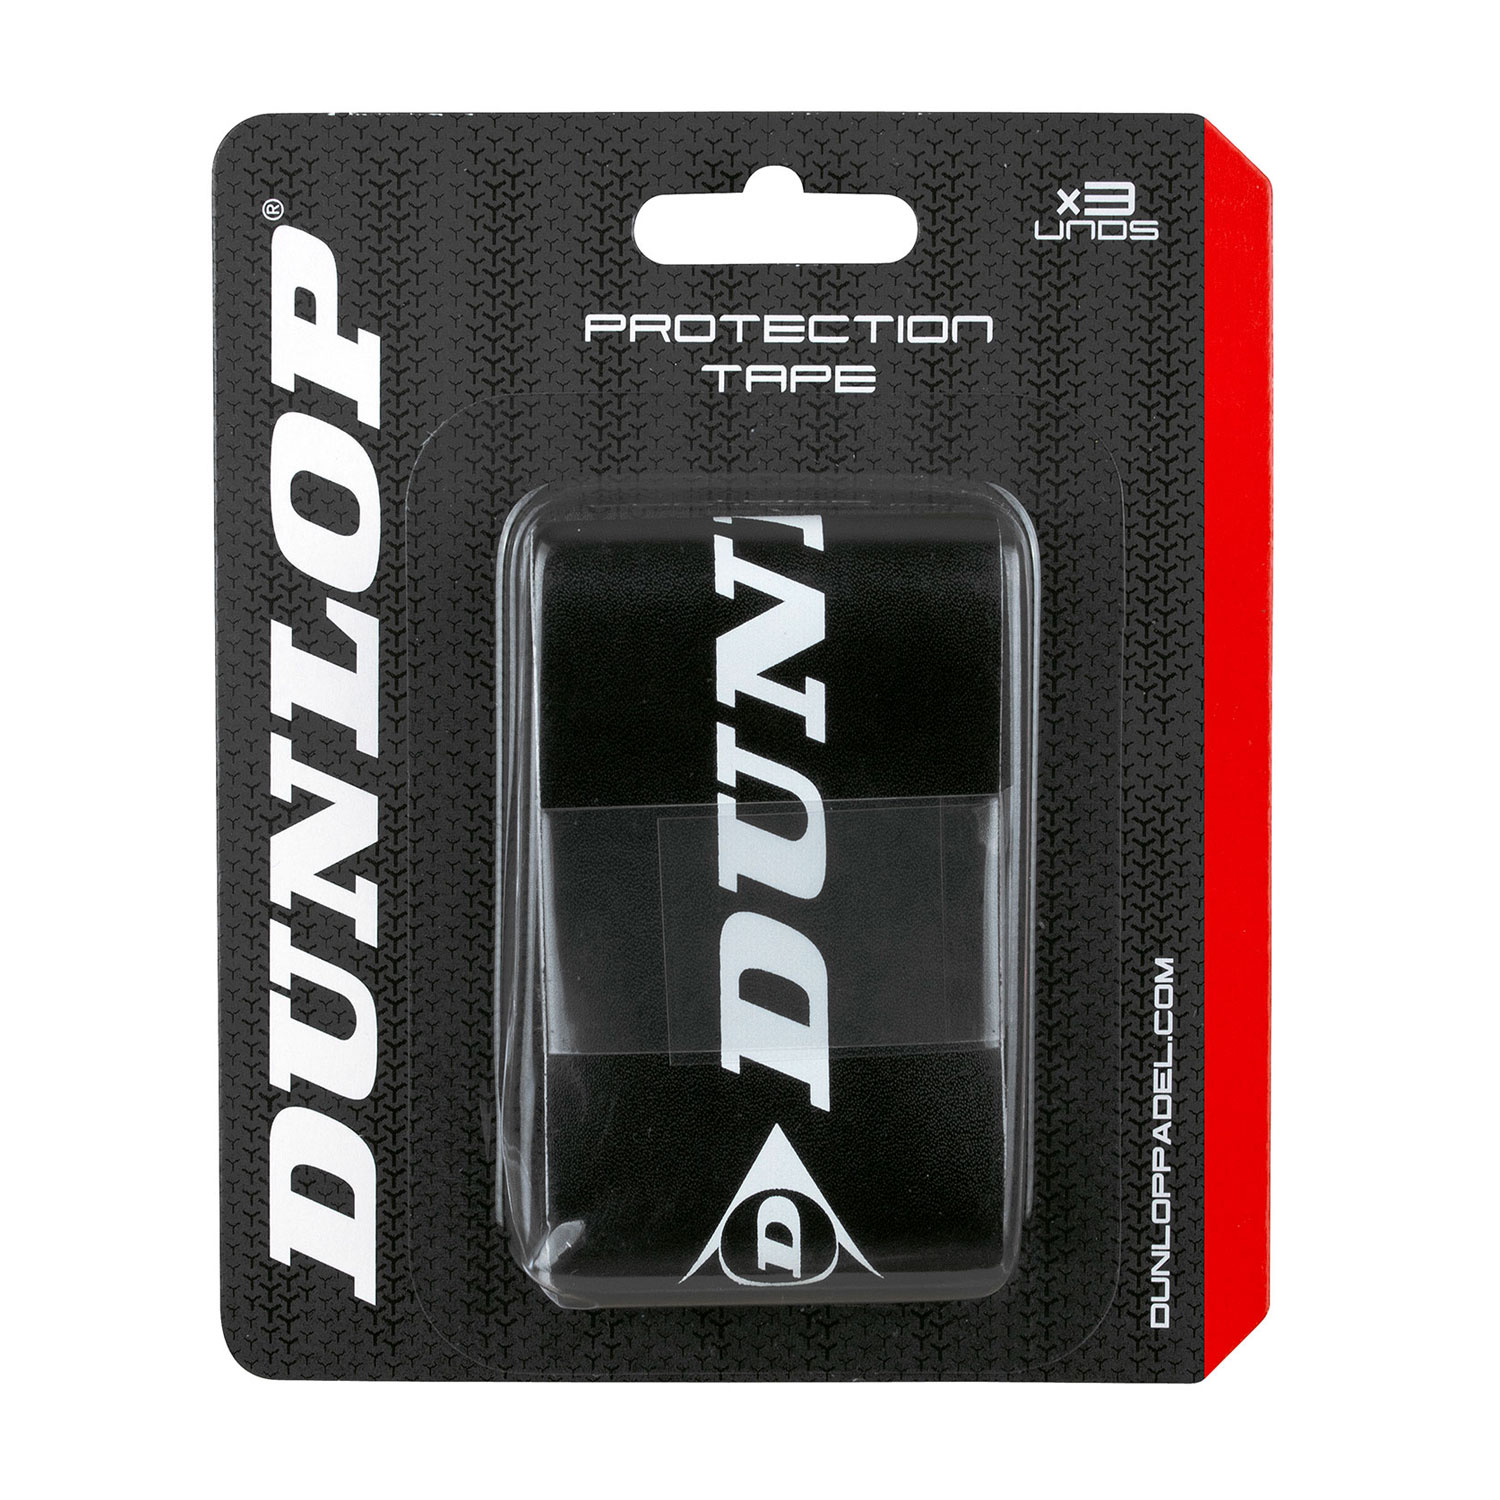 Dunlop Logo x 3 Protector - Black/White